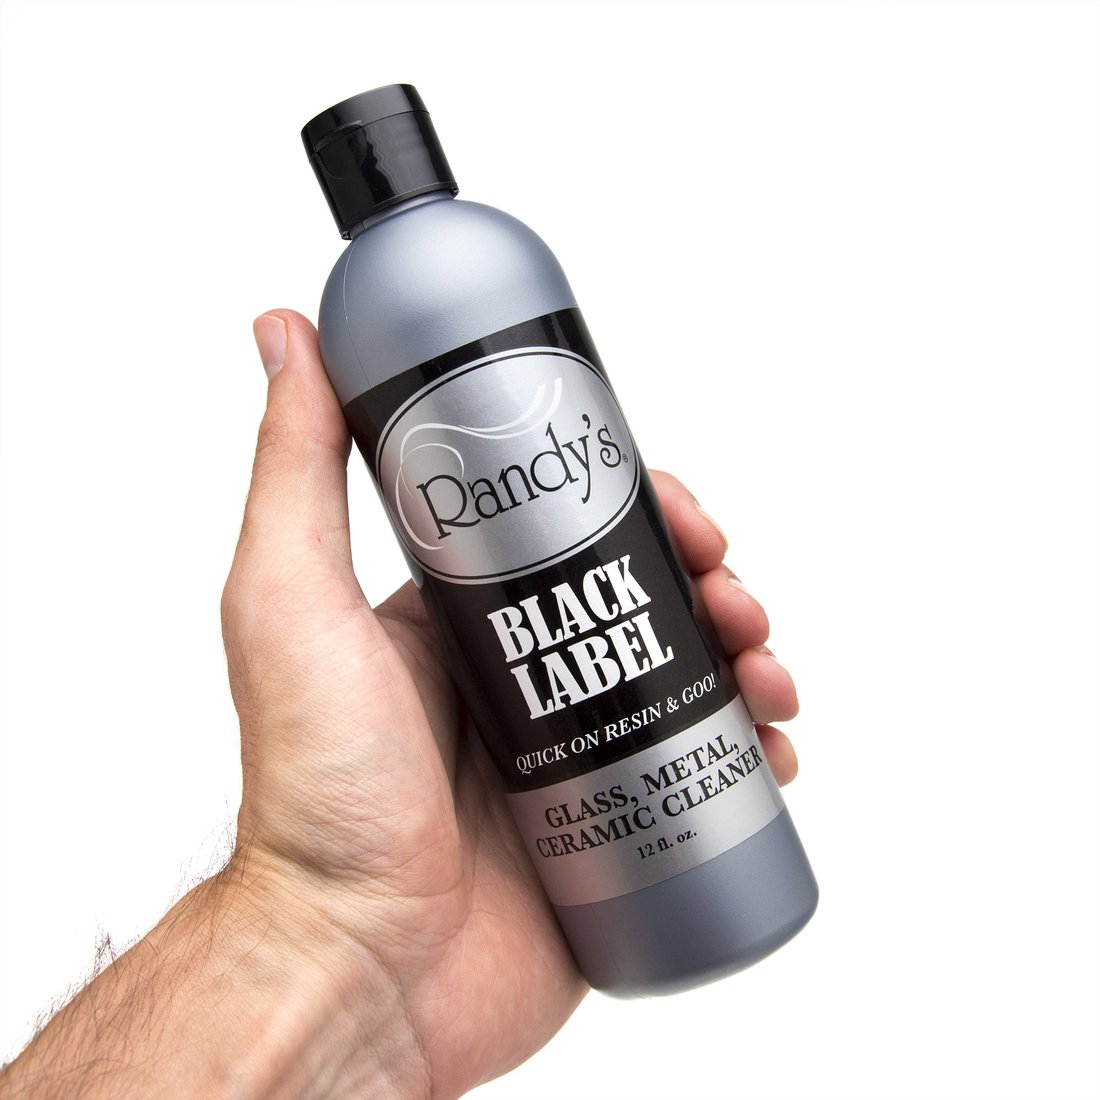 Randyâ€™s Black Label Glass Cleaner